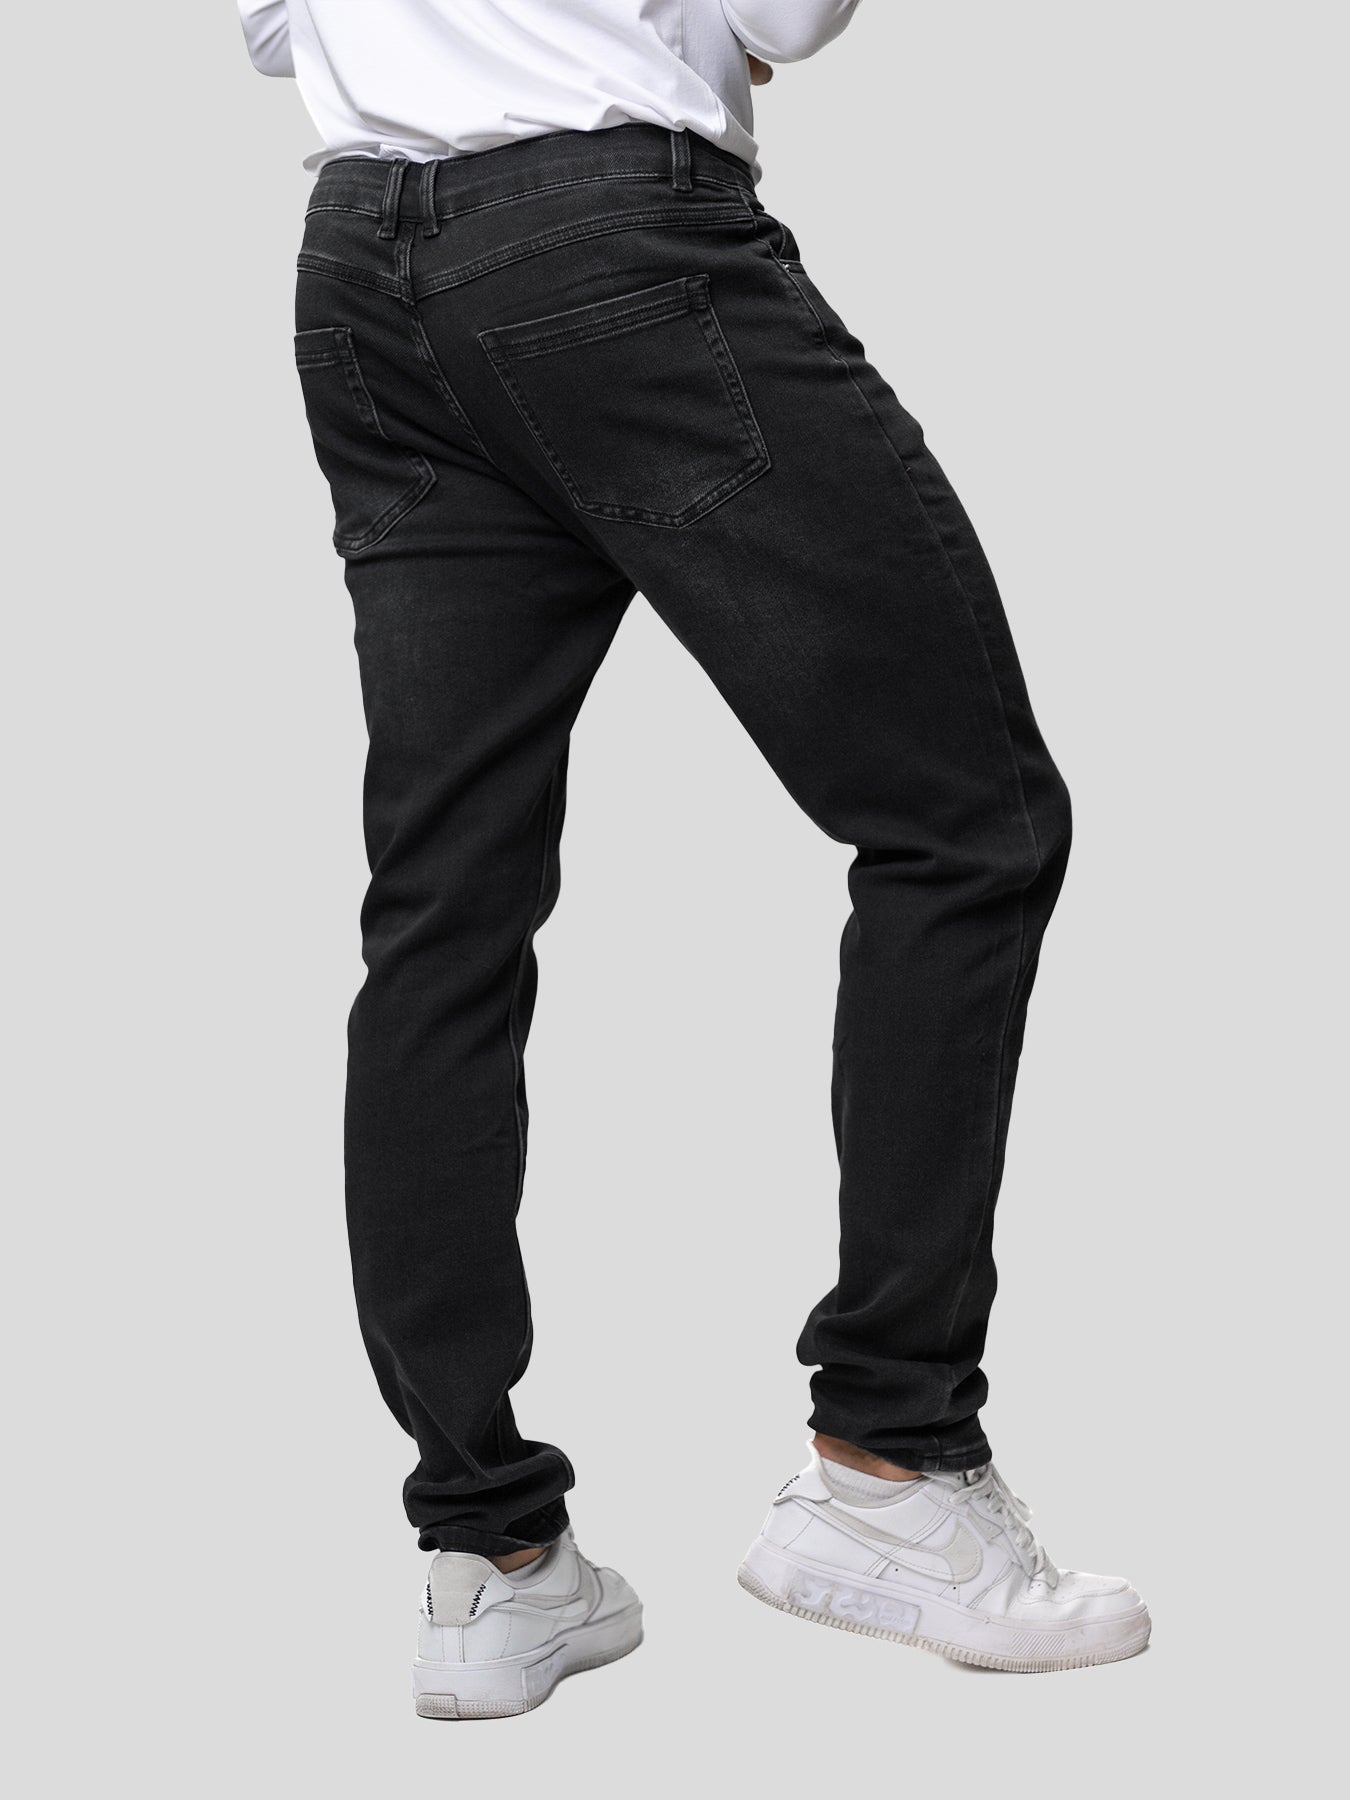 Fioboc Men\'s Pants High Classic Stretch Jeans